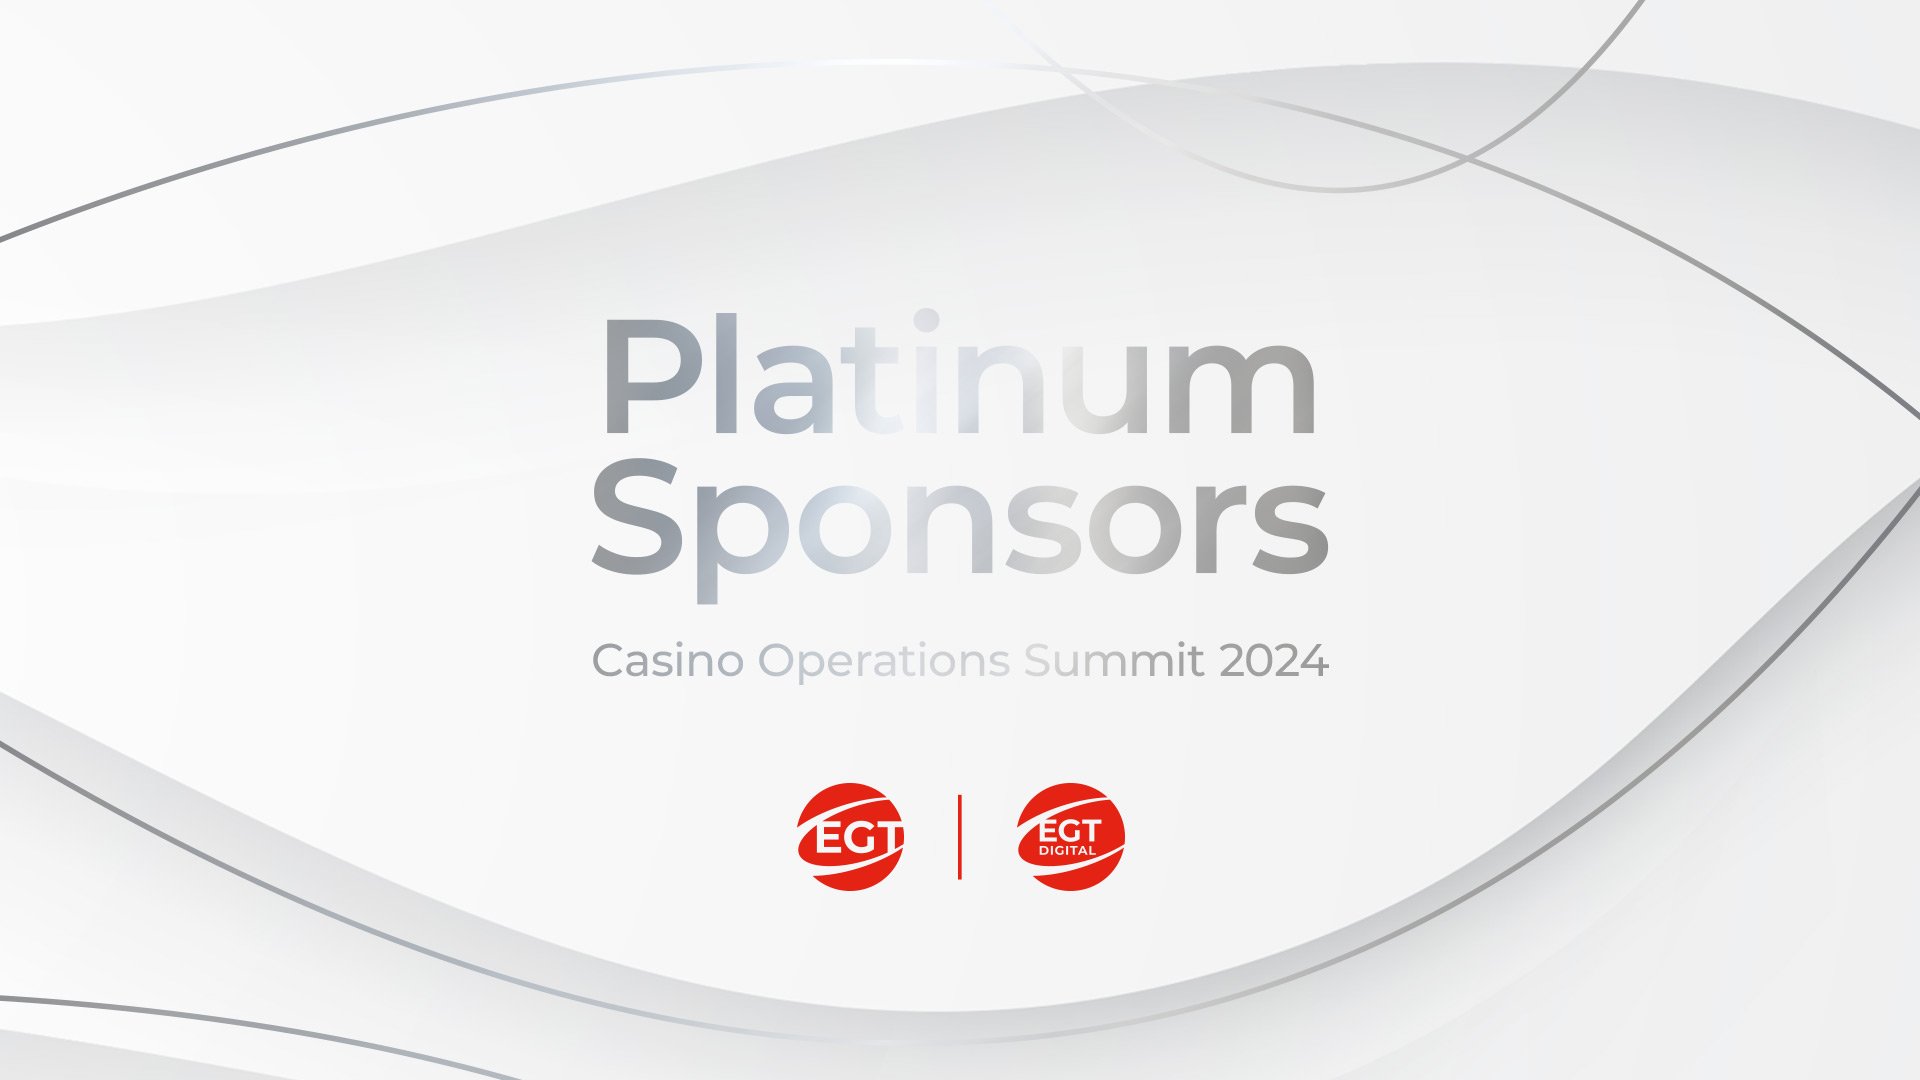 EGT and EGT Digital confirm presence at Amsterdam’s Casino Operations Summit as platinum sponsors | Yogonet International